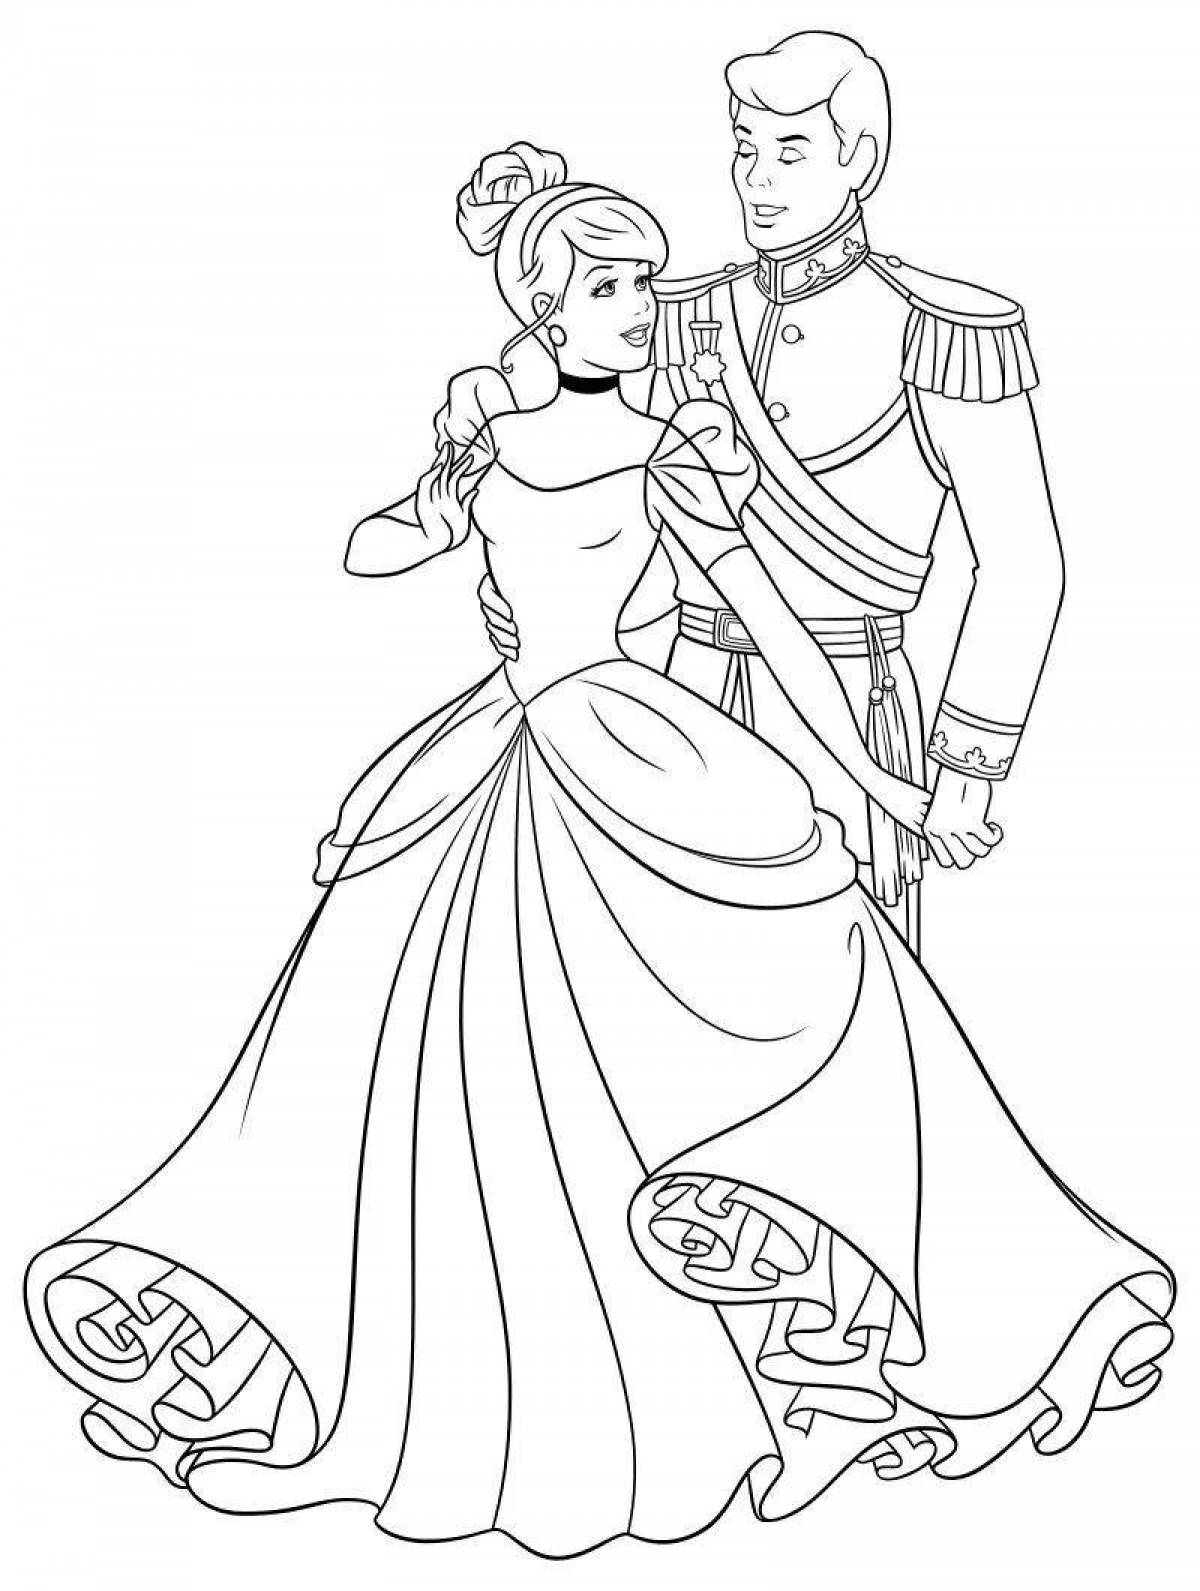 Gorgeous Cinderella princess coloring page